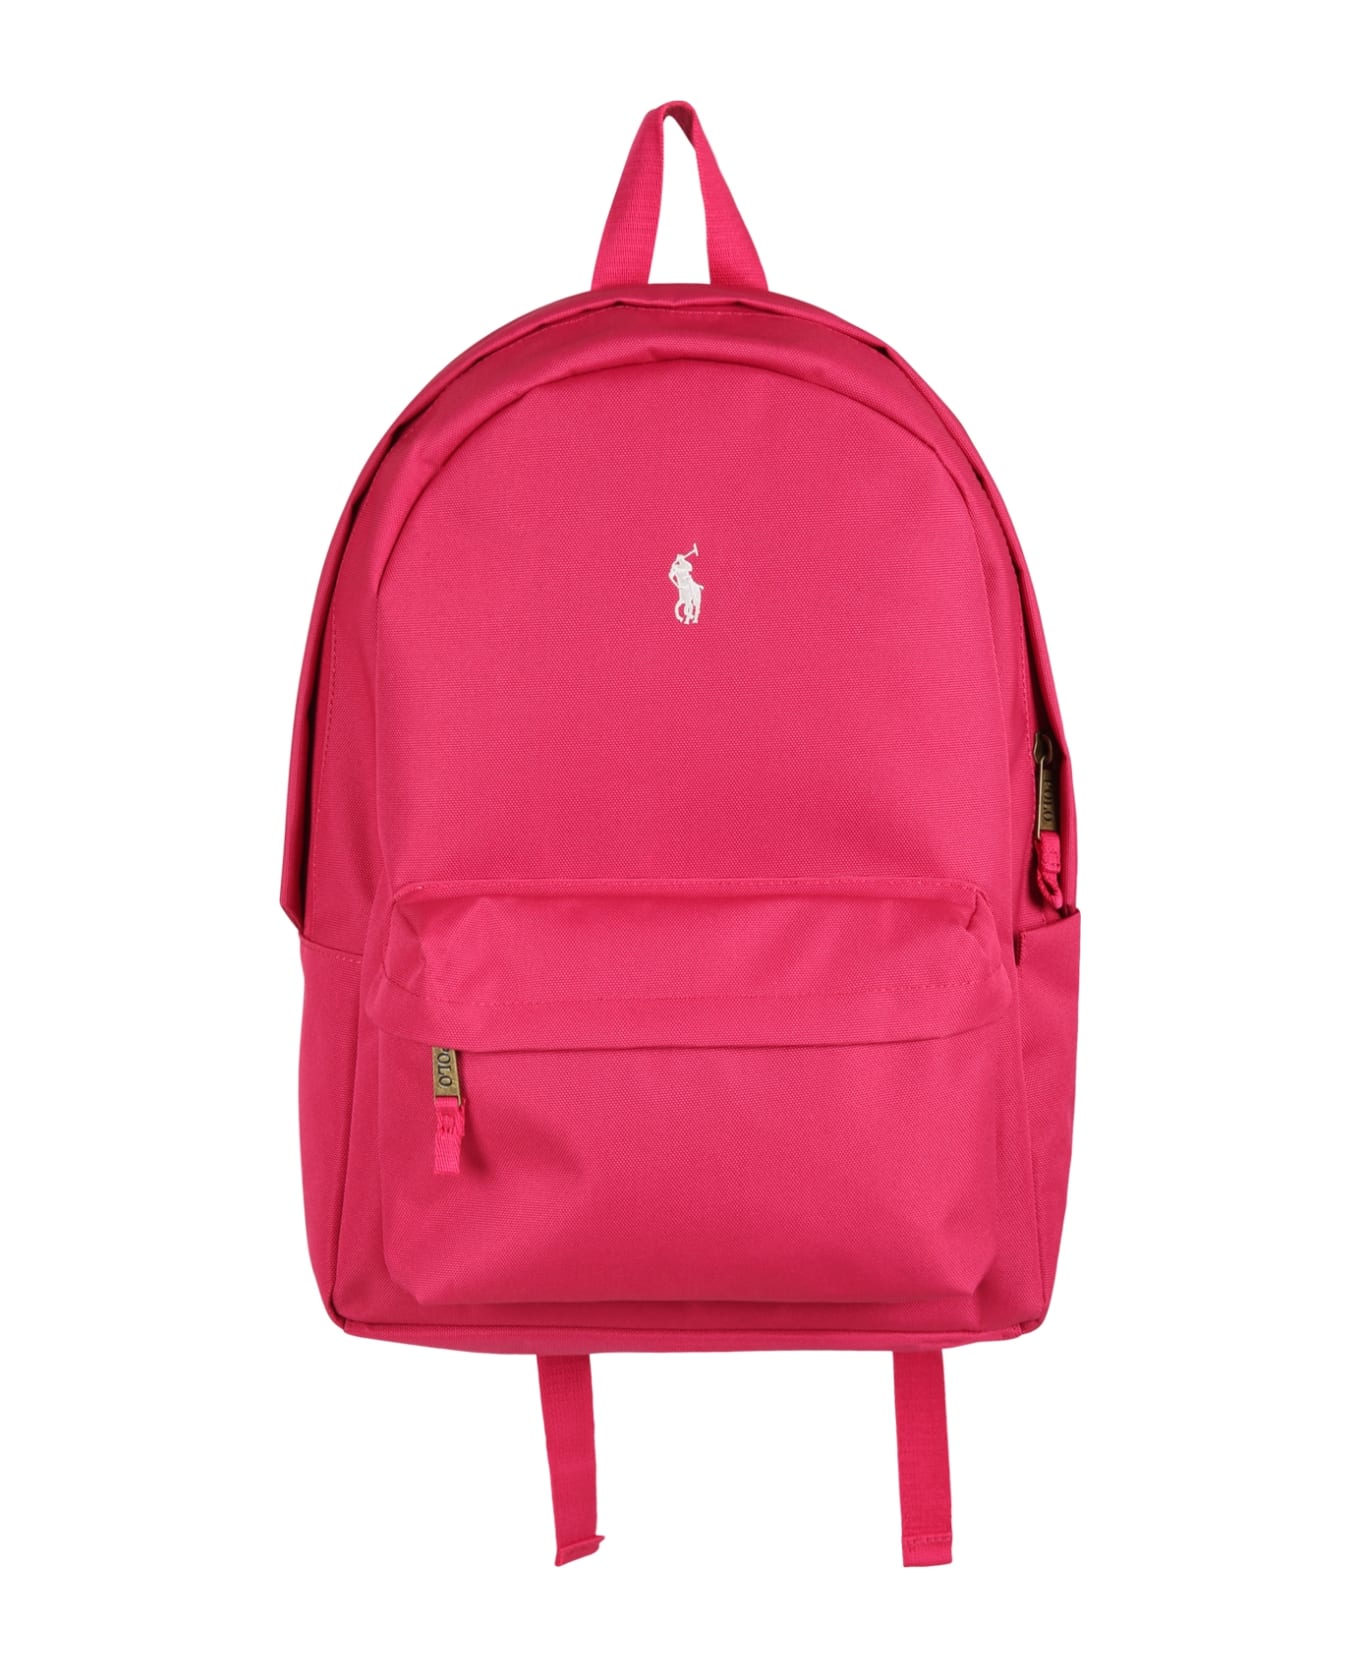 Ralph Lauren Fuchsia Backpack For Girl With Iconic Pony Logo - Fuchsia